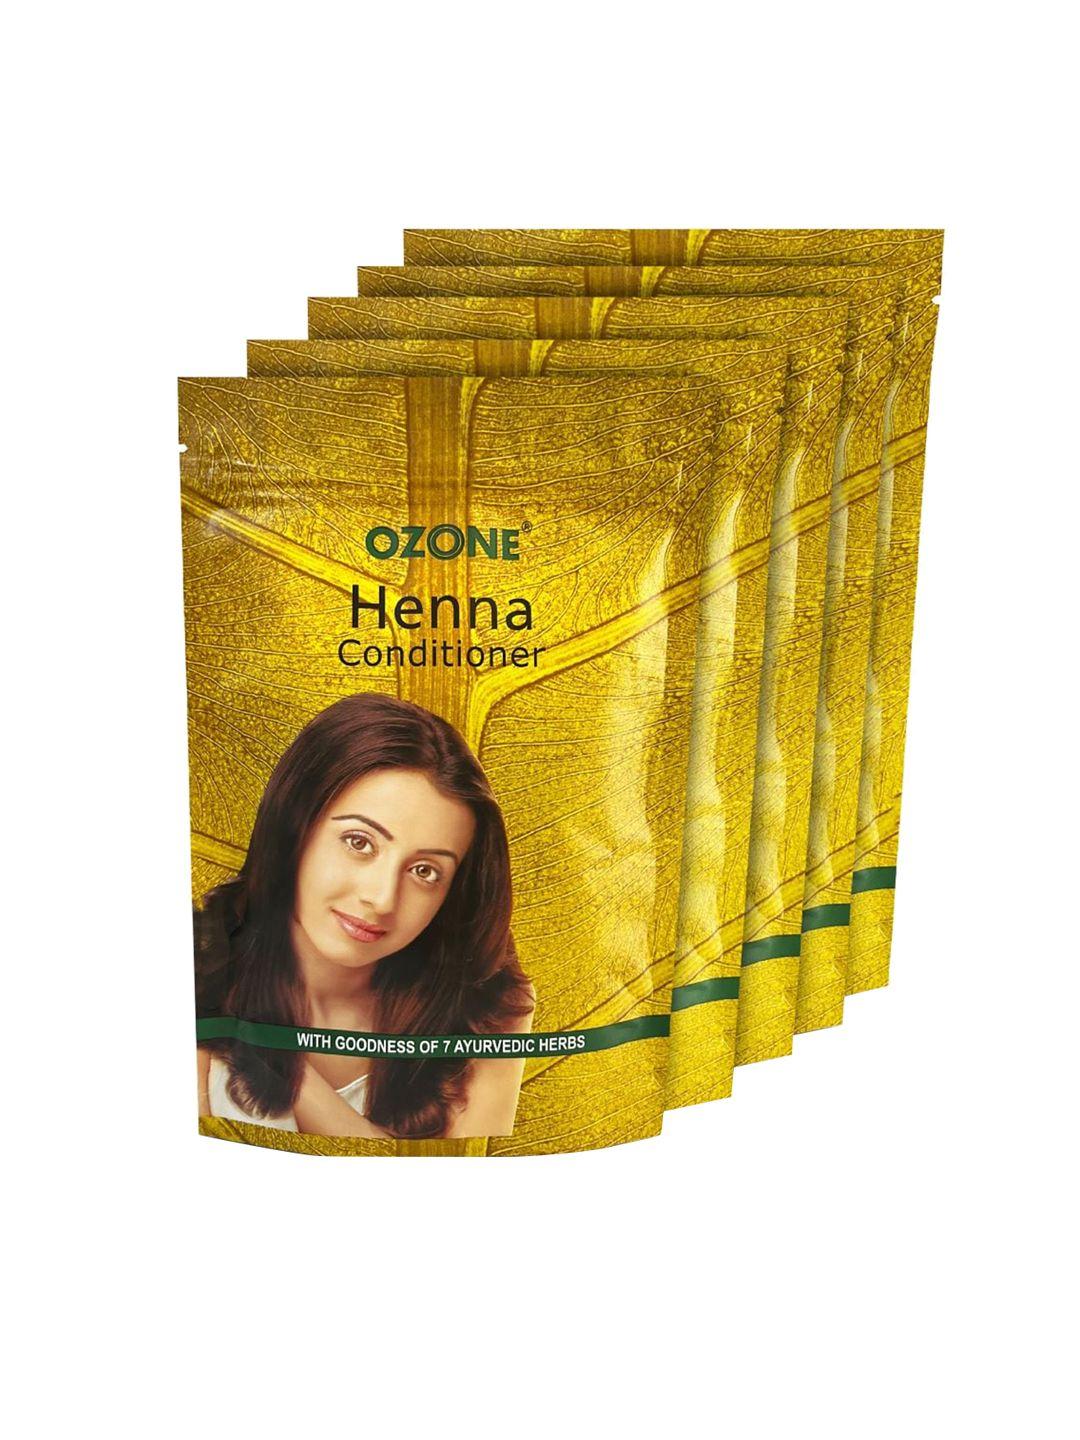 ozone set of 5 100% organic henna conditioner mehndi with 7 ayurvedic herbs - 200g each